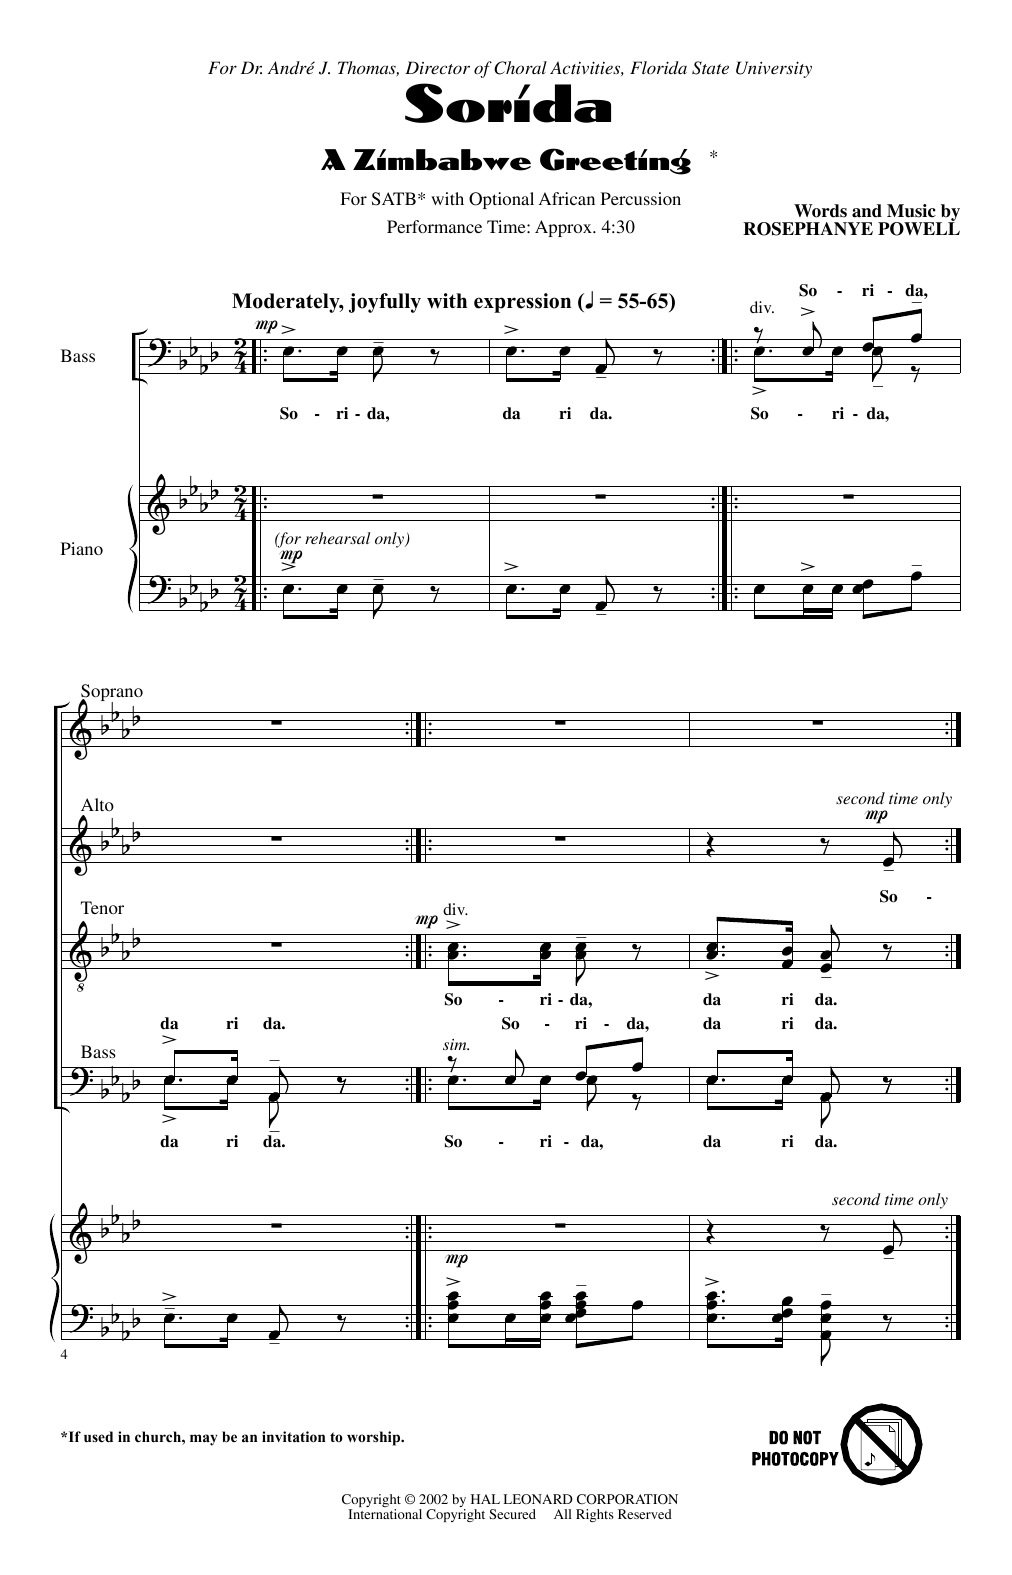 Rosephanye Powell Sorida (A Zimbabwe Greeting) Sheet Music Notes & Chords for SATB Choir - Download or Print PDF